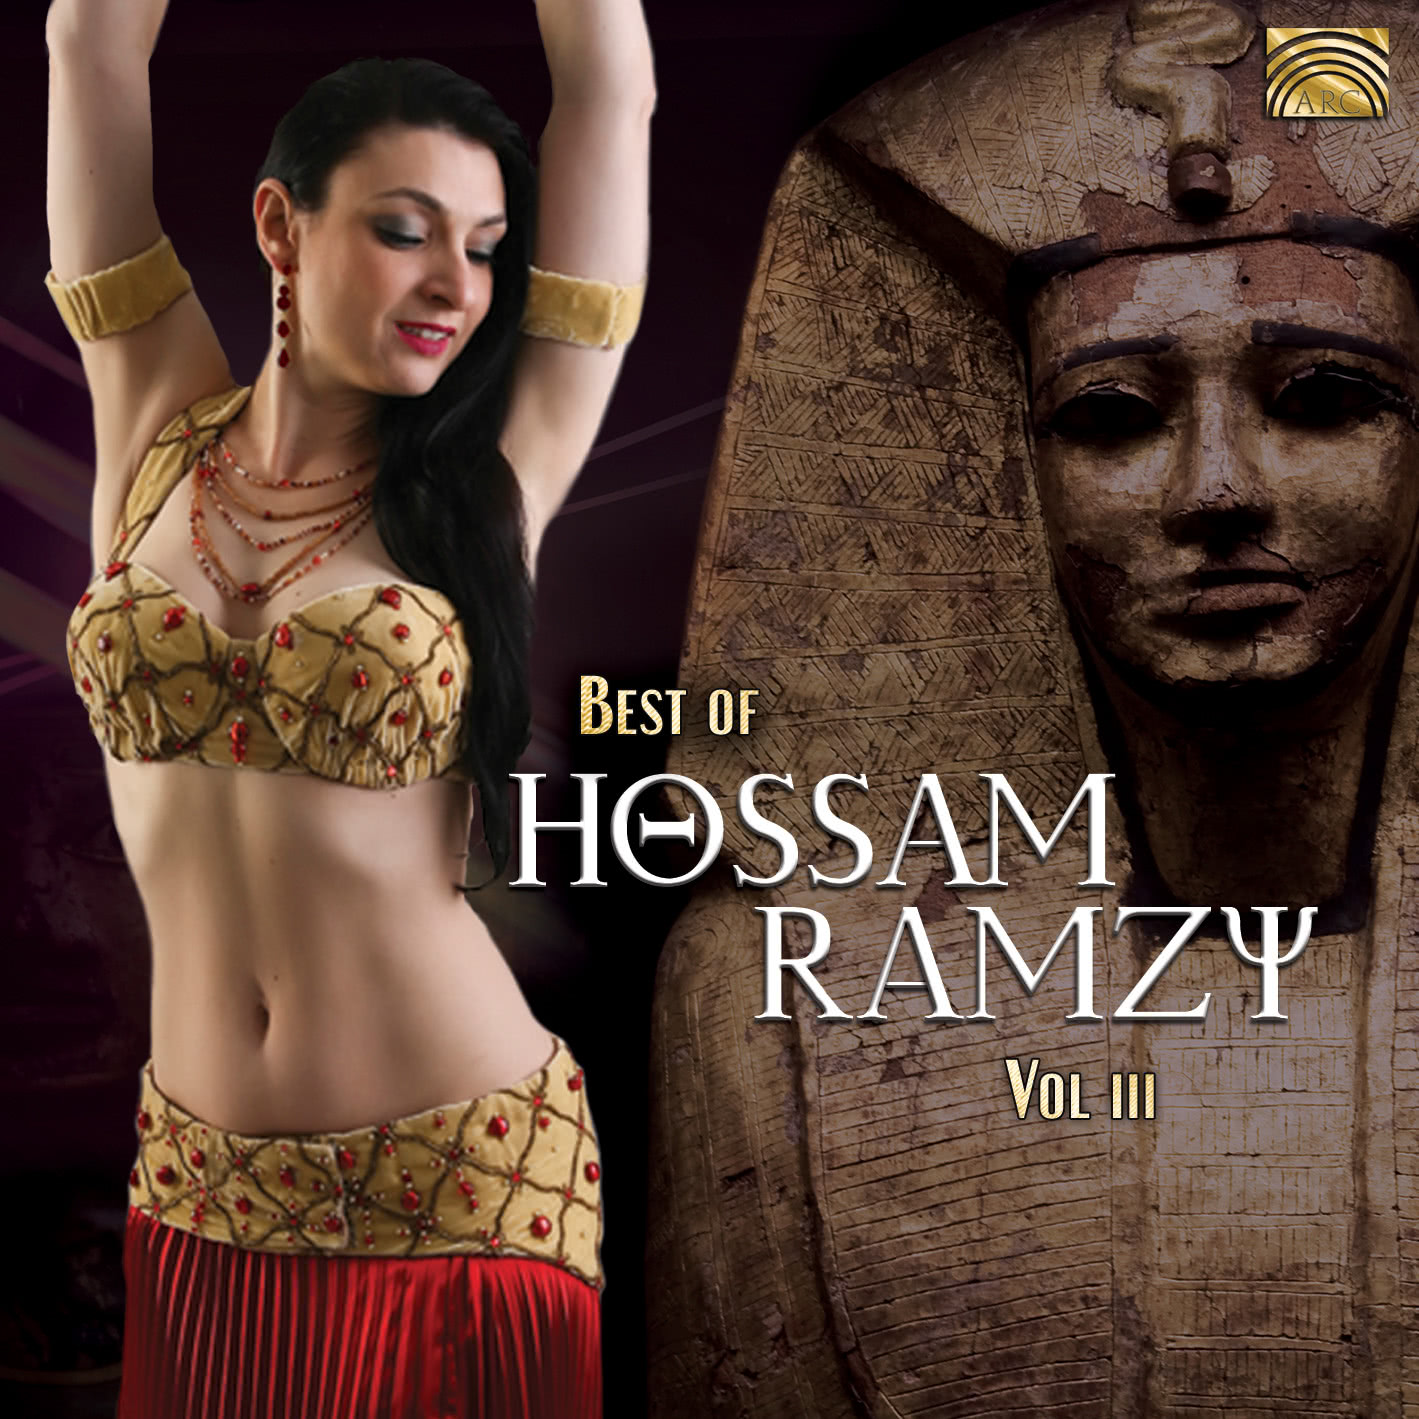 EUCD2500 The Best of Hossam Ramzy, Vol III